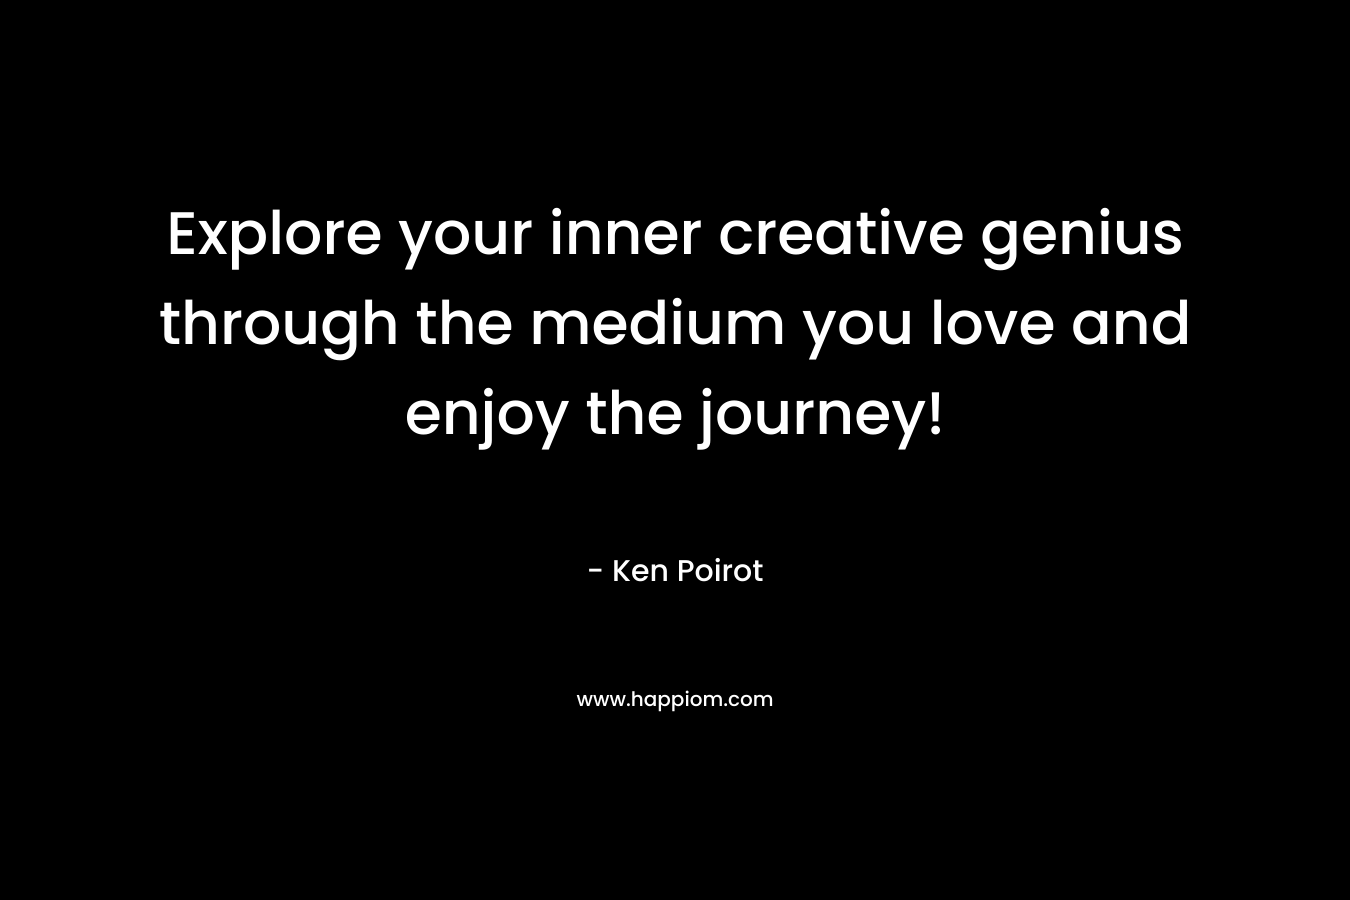 Explore your inner creative genius through the medium you love and enjoy the journey!